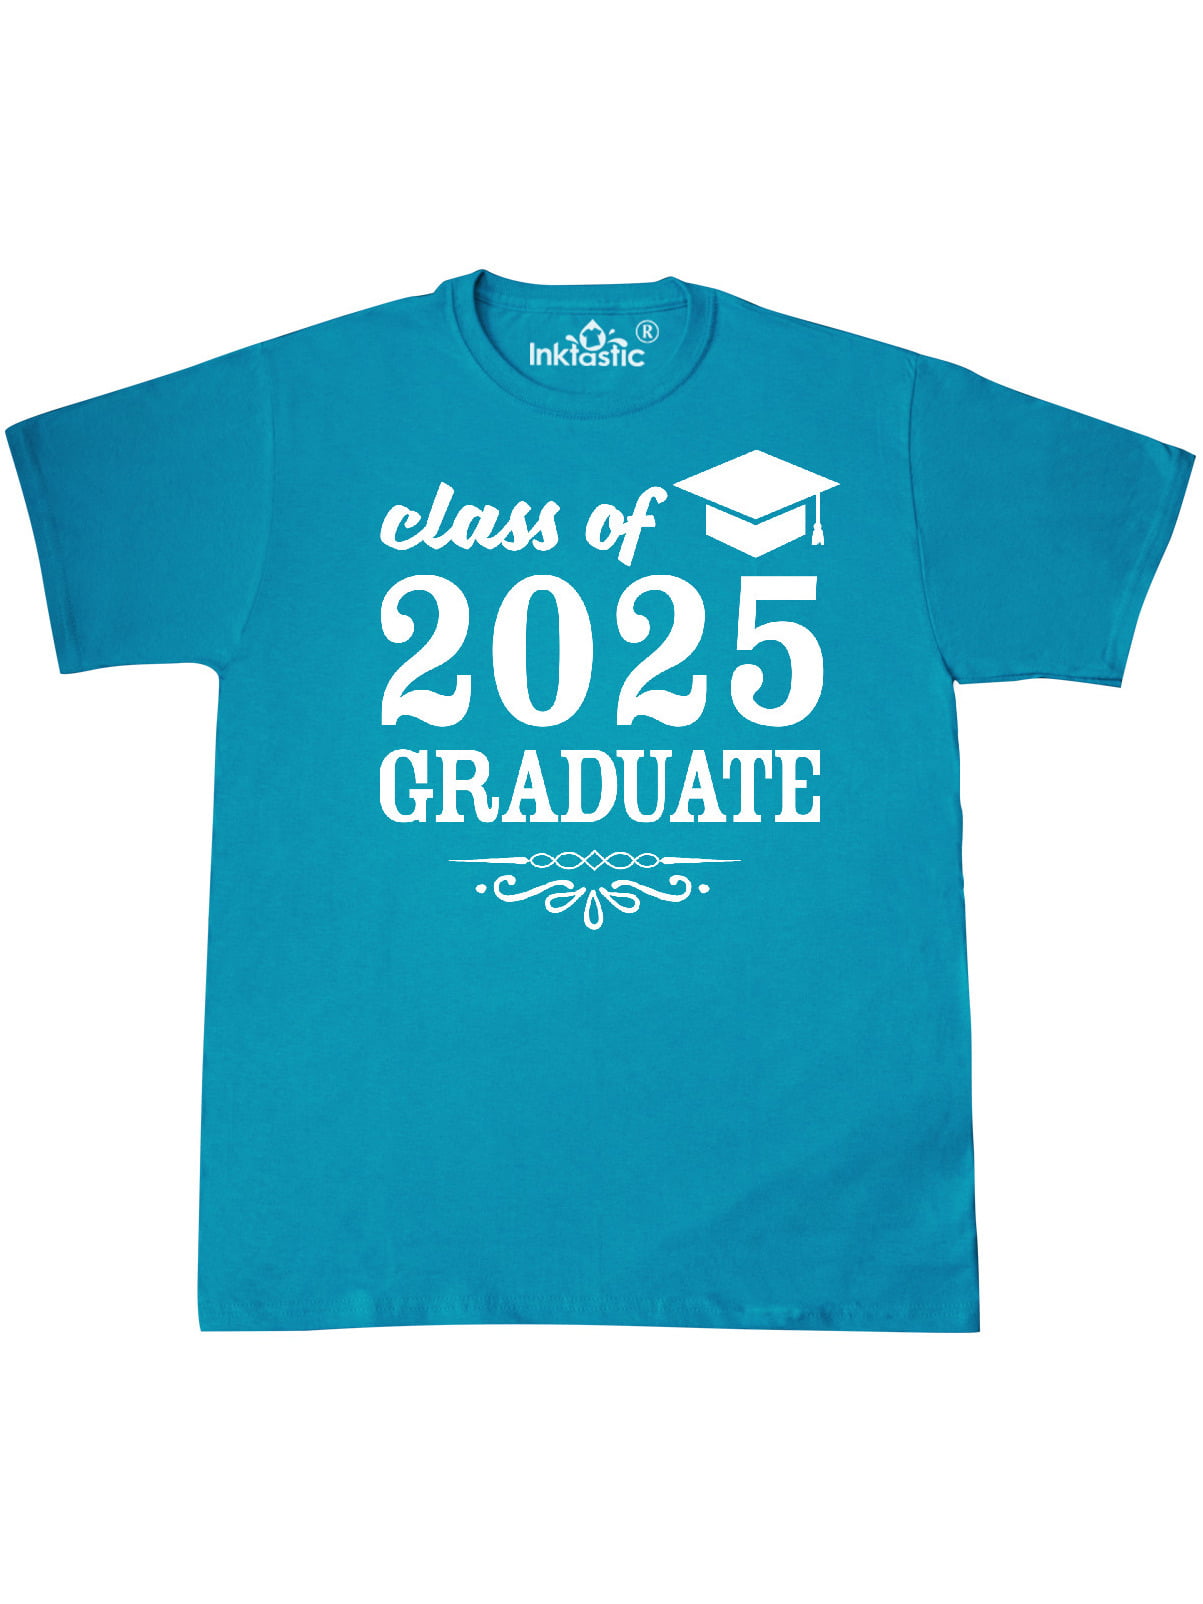 Inktastic Class of 2025 Graduate with Graduation Cap T-Shirt - Walmart.com